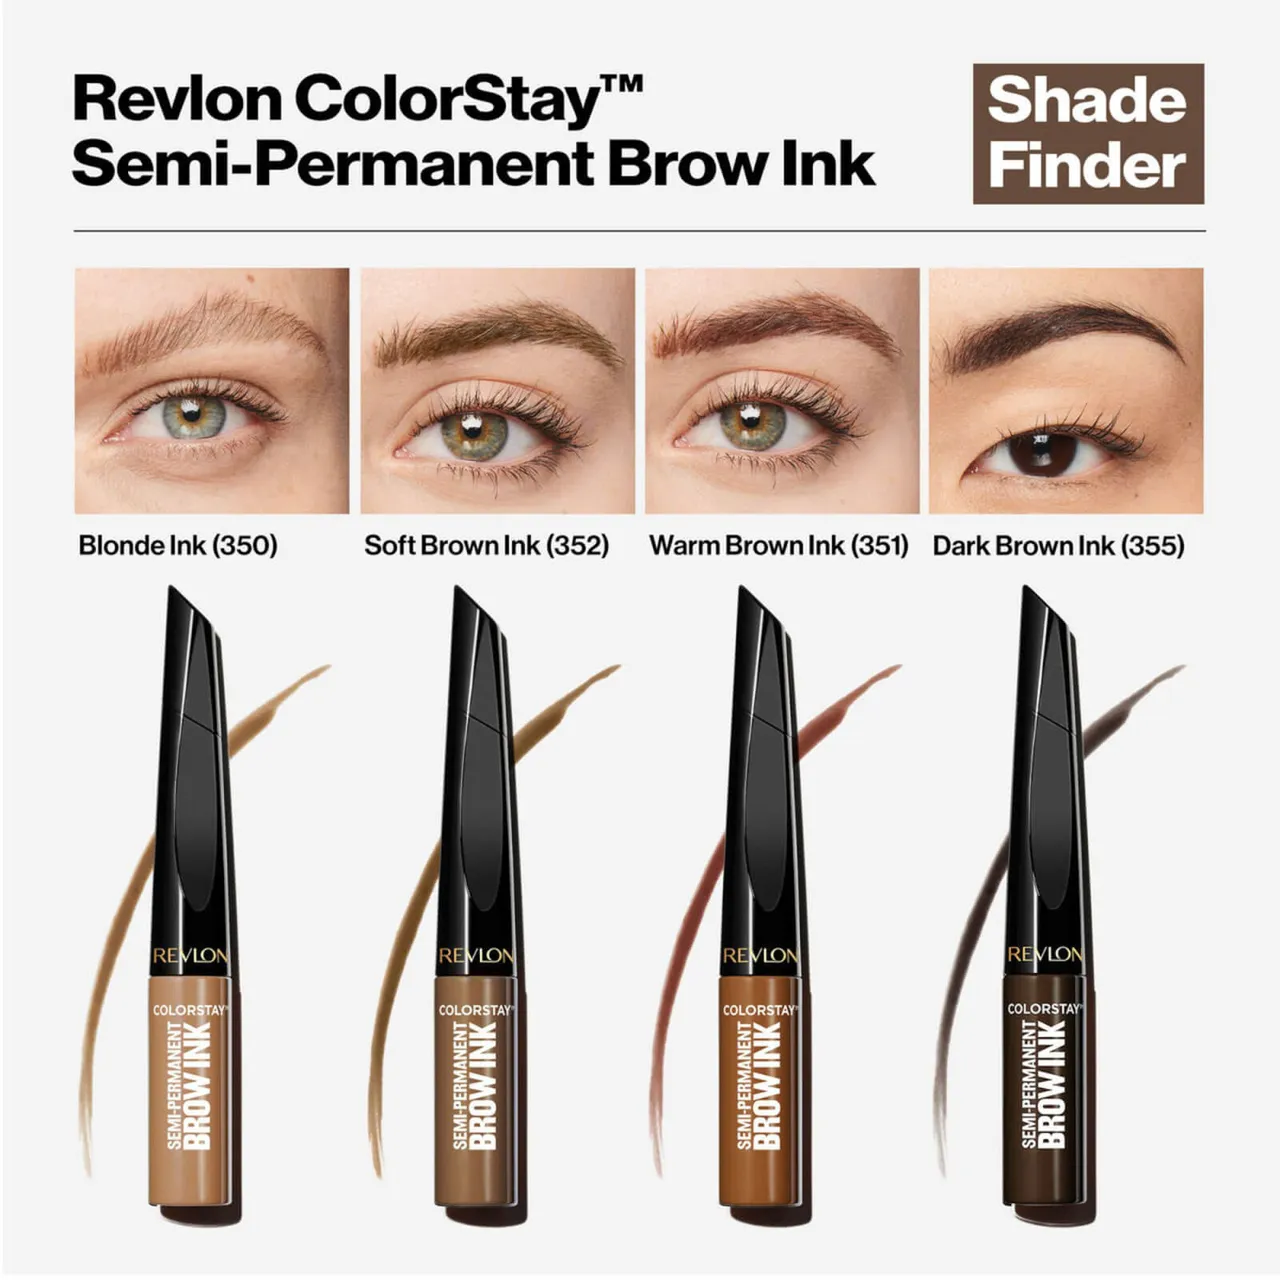 Revlon ColorStay Semi-Permanent Brow Ink 2.8ml (Various Shades) - Blonde